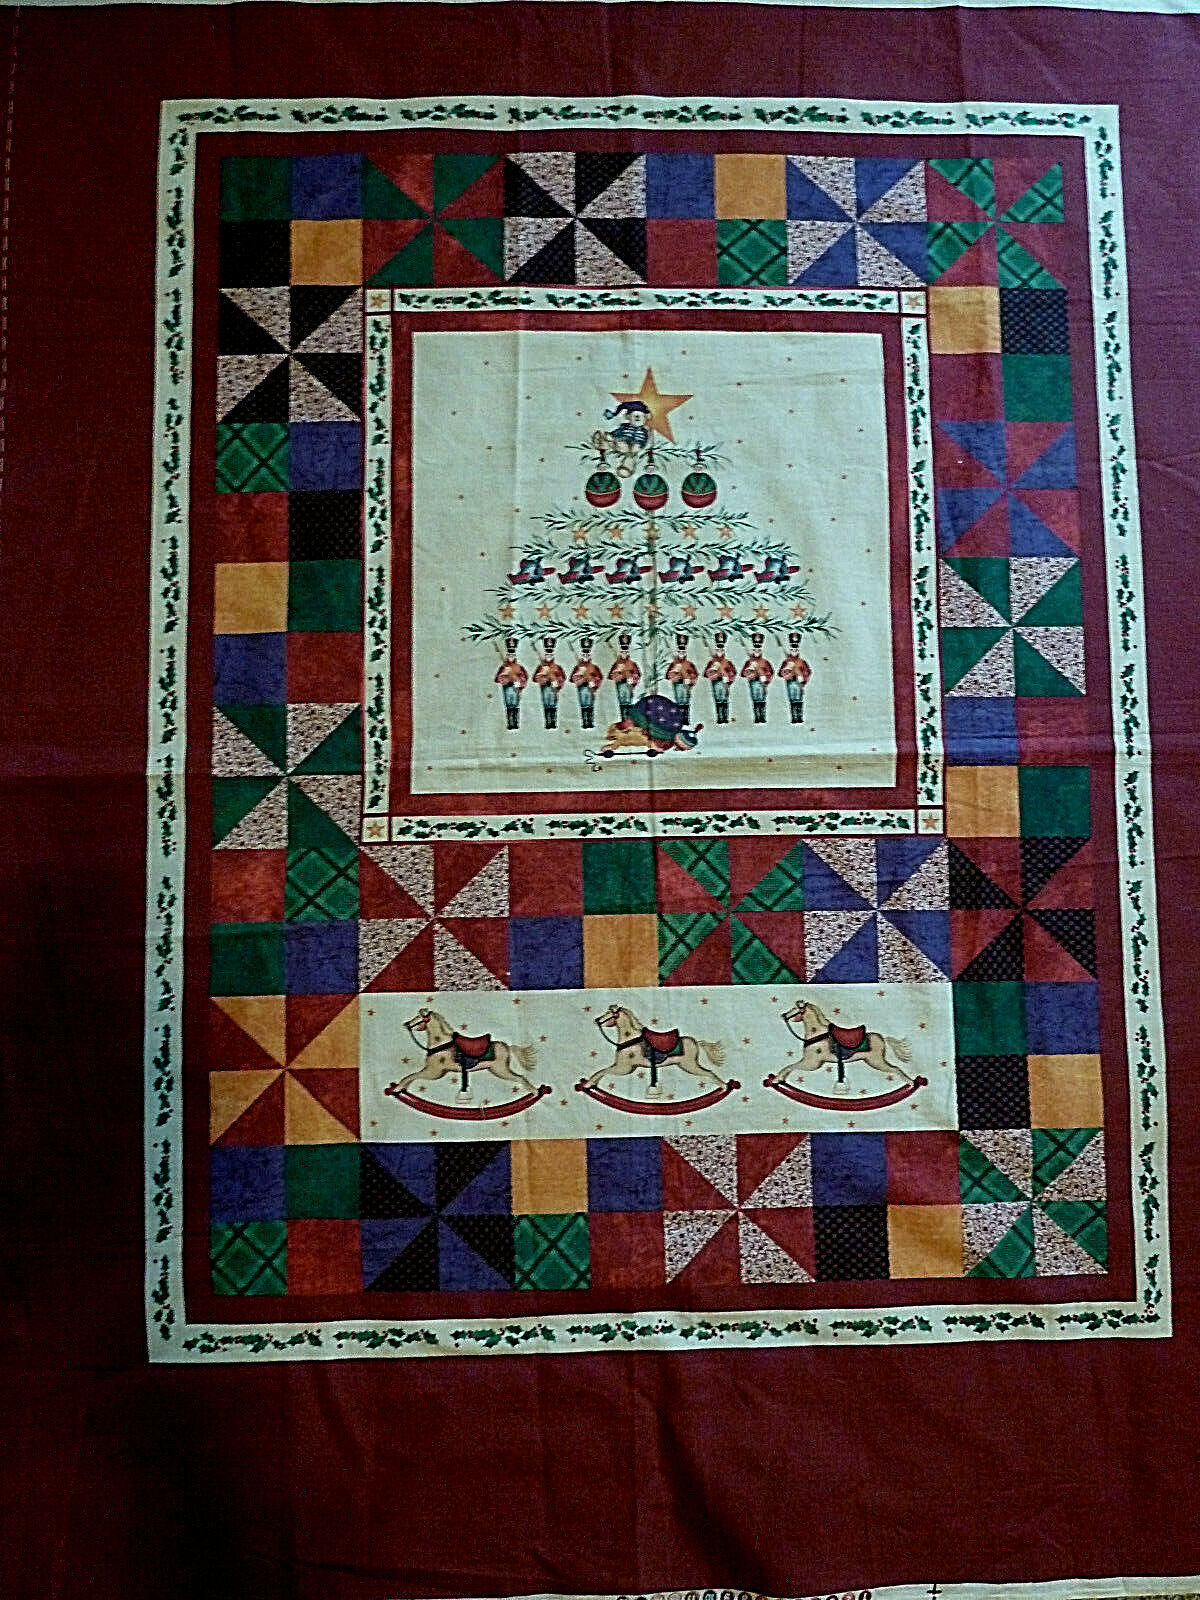 Daisy Kingdom Cotton Christmas Fabric Panel 37303 Toy Tree 1 Yd 1996 - $8.16